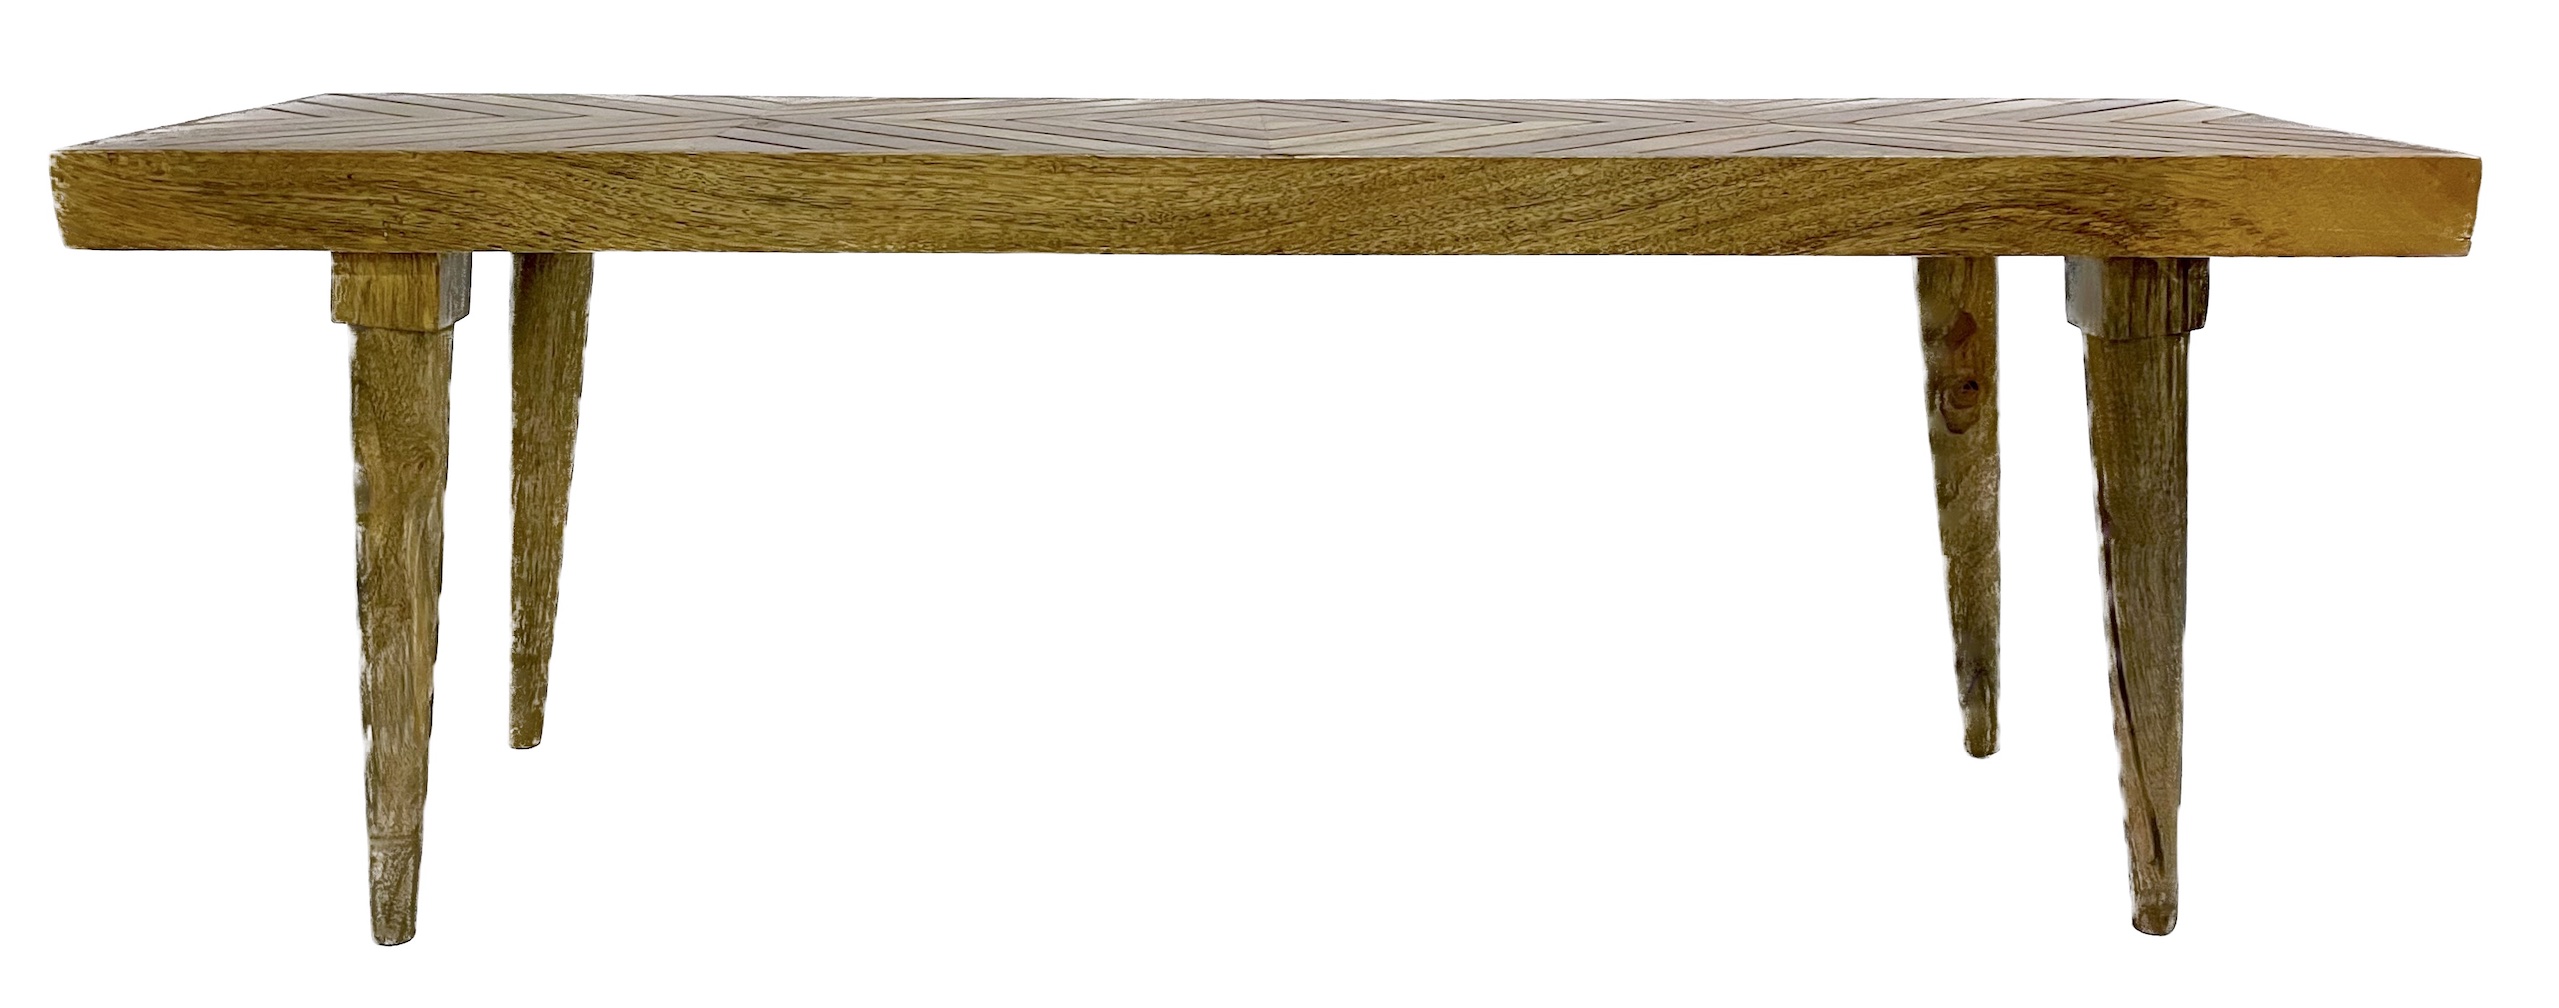 Midcentury Style Chevron Slatted Bench~P77684302